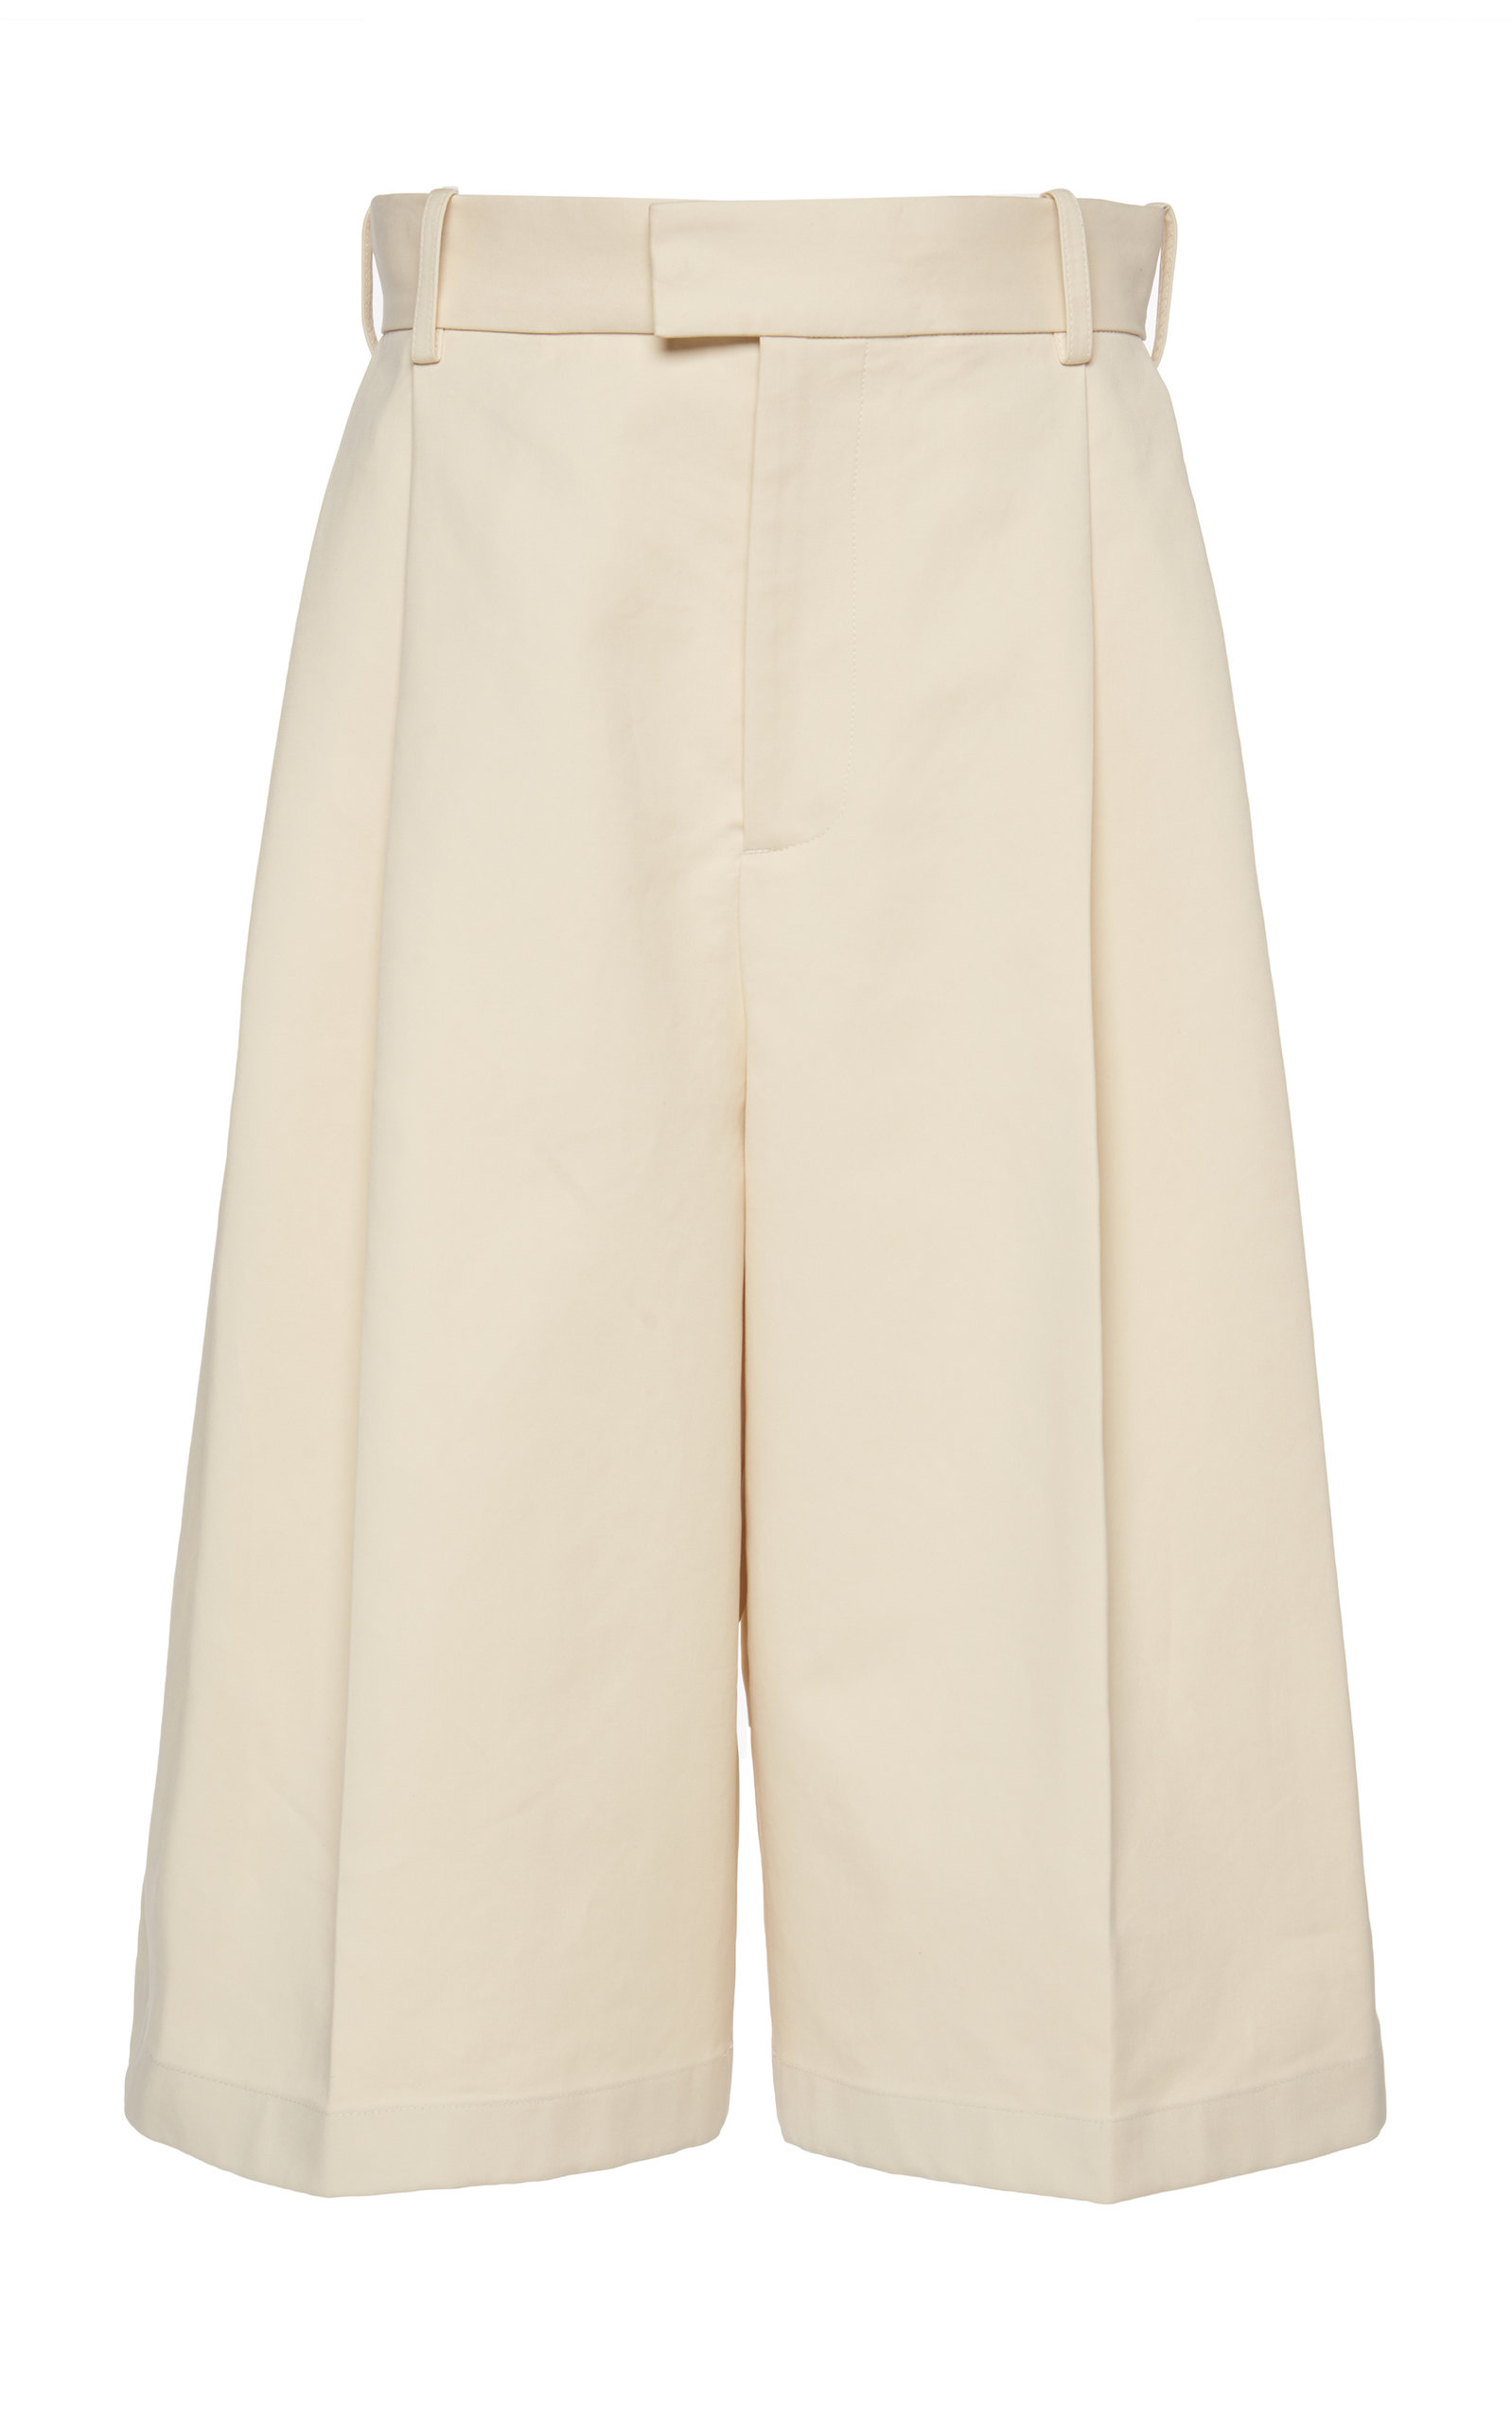 Bottega Veneta Women's Pleated Cotton Shorts